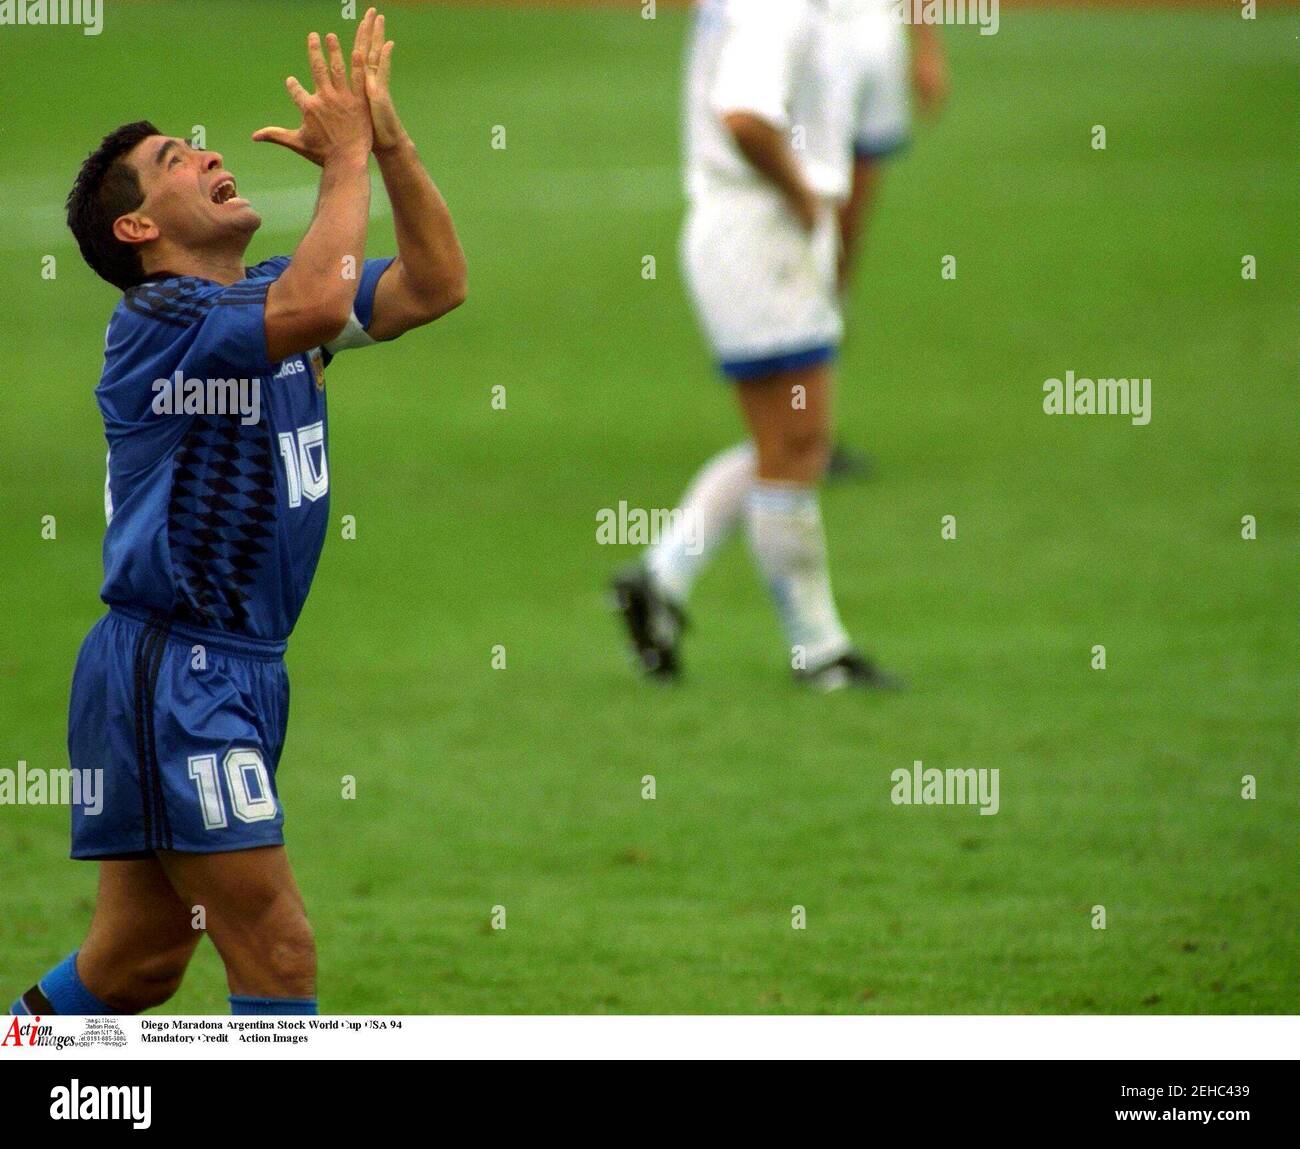 Diego Maradona Argentine stock coupe du monde USA 94 crédit obligatoire :  Images d'action /pic:Tony Henshaw Photo Stock - Alamy